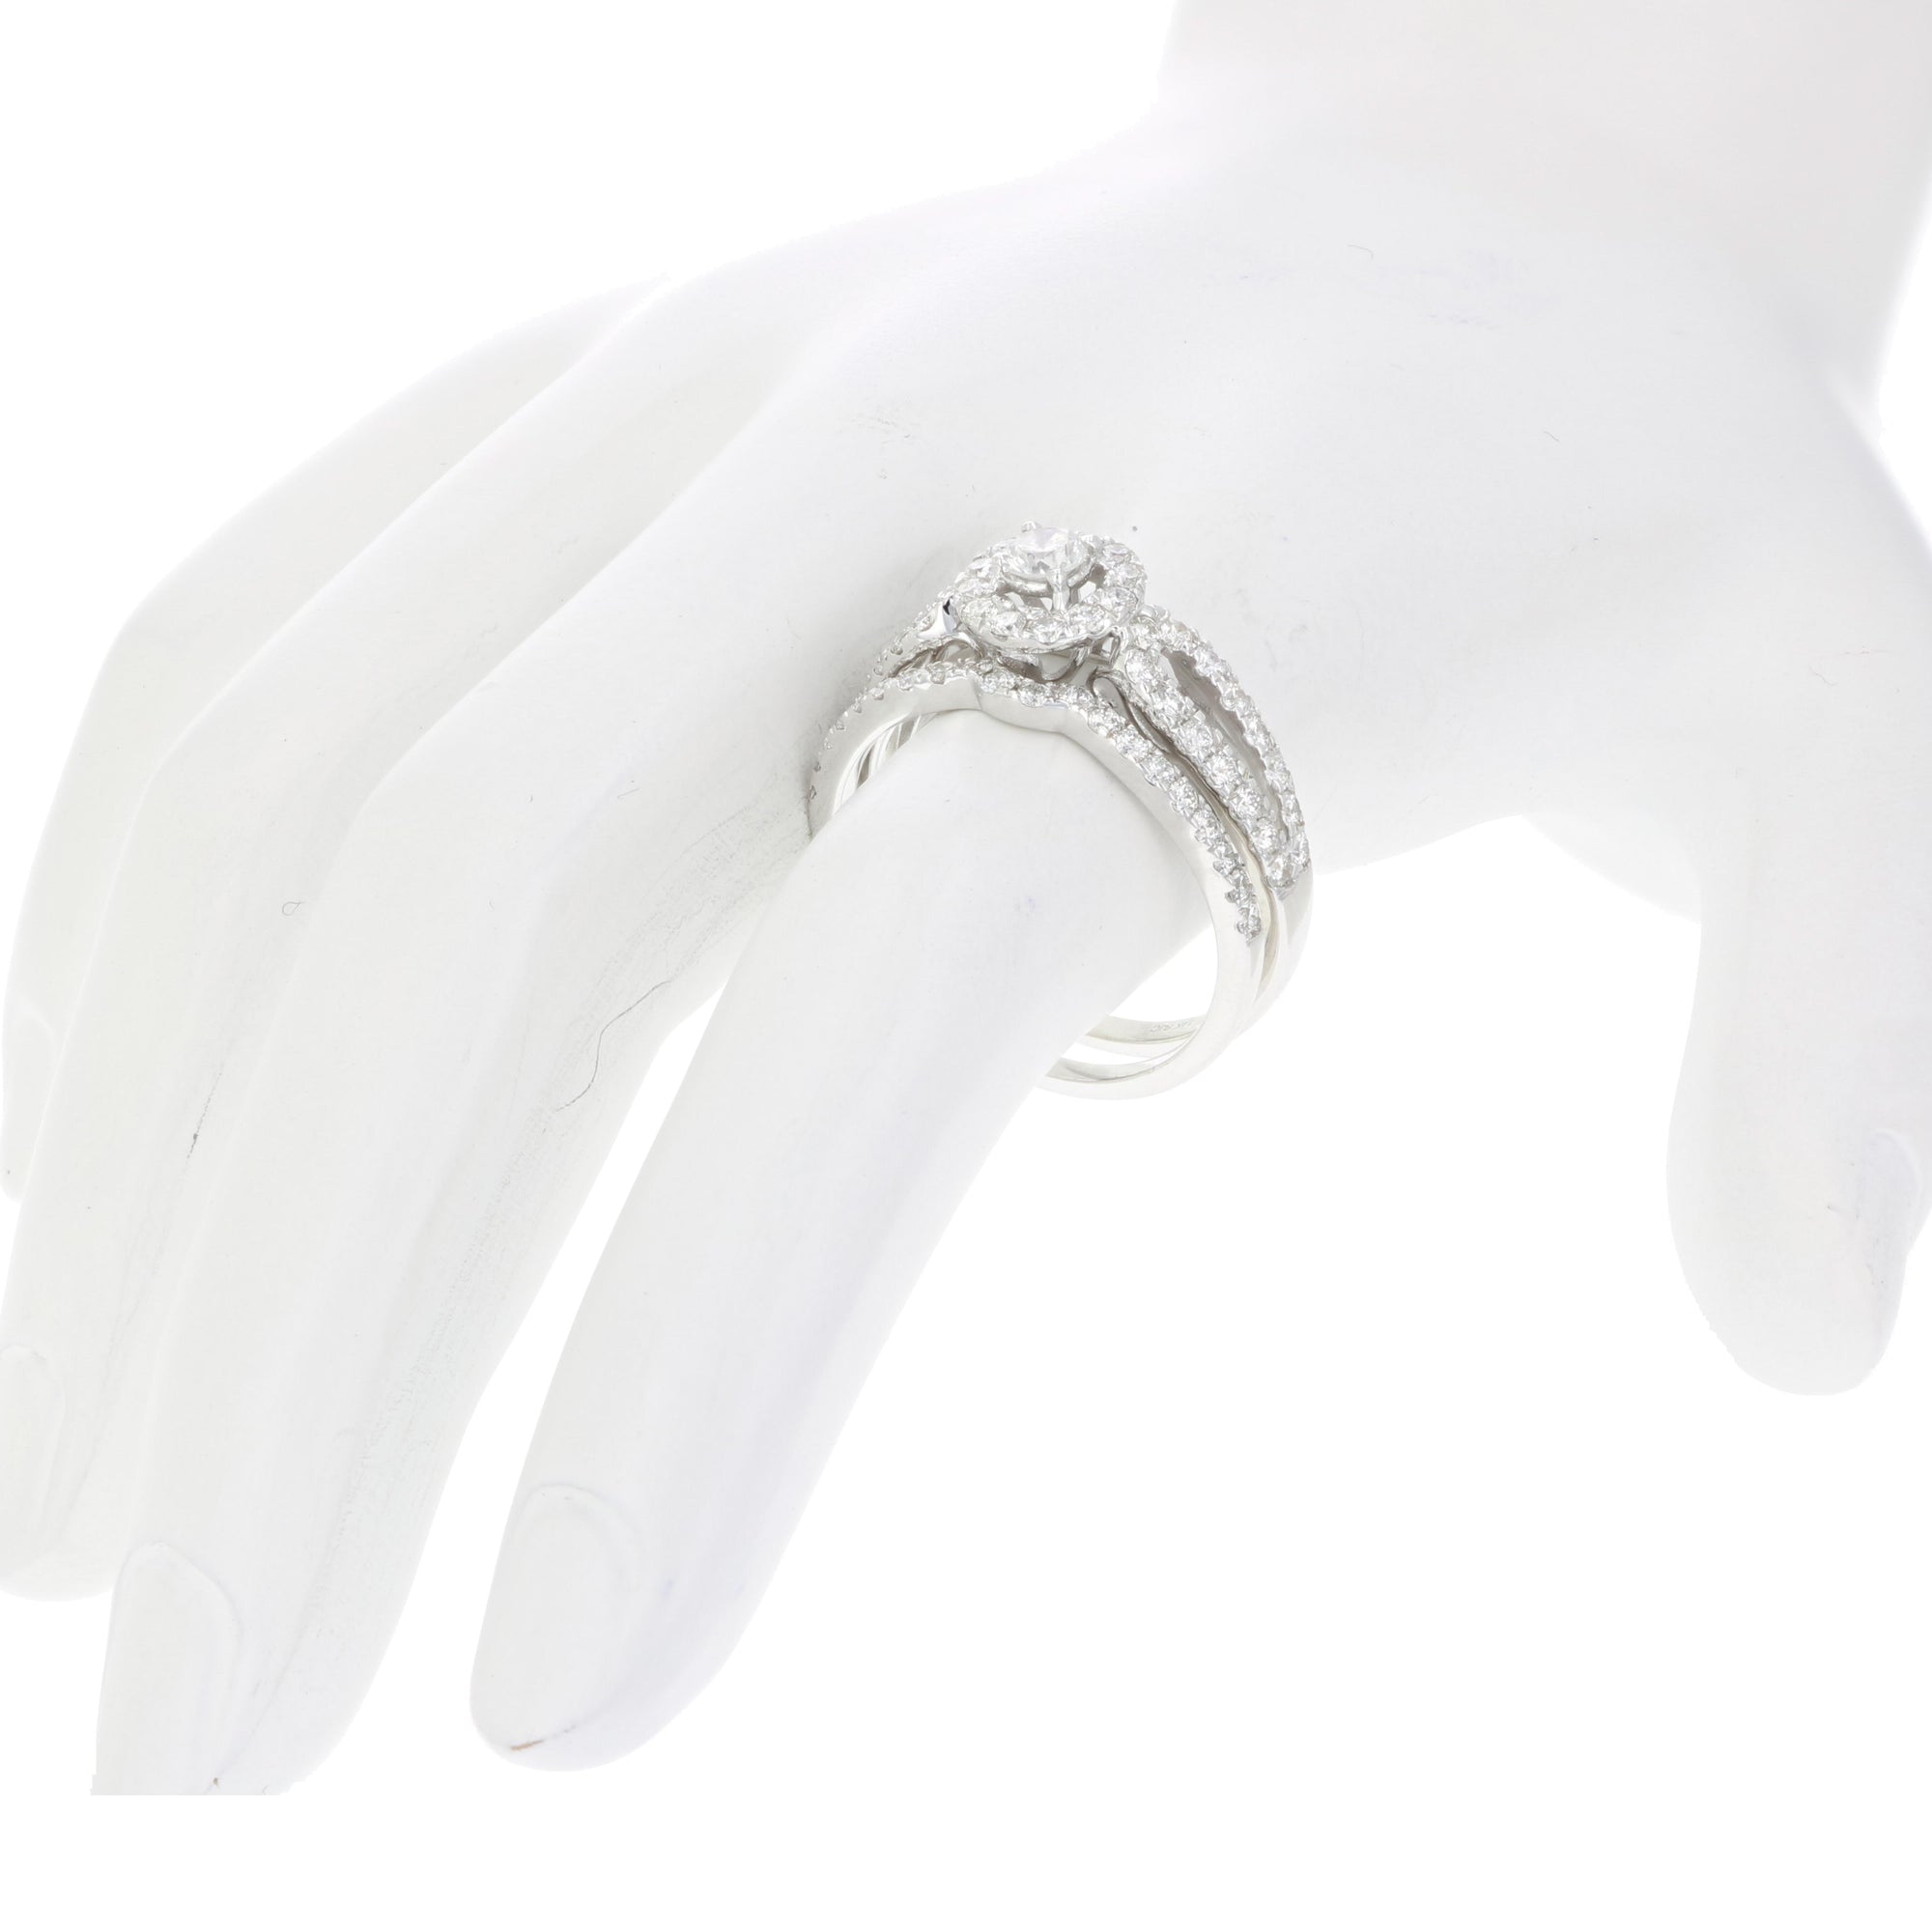 7/8 cttw Diamond Wedding Engagement Ring Bridal Set 14K White Gold Halo